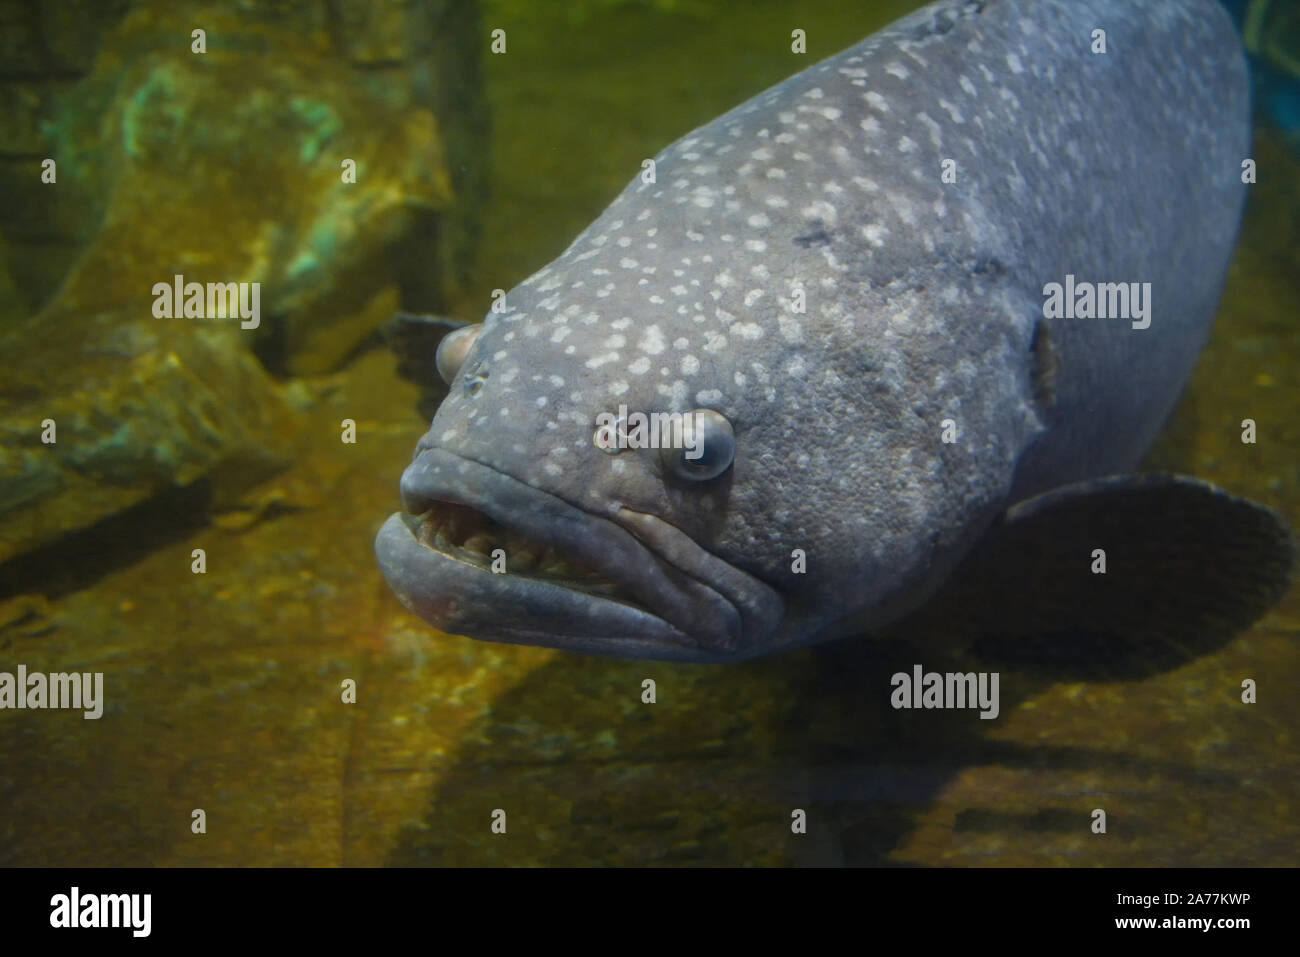 Giant grouper fish or Serranidae fish swimming underwater fish tank at aquarium / Epinephelus lanceolatus Stock Photo